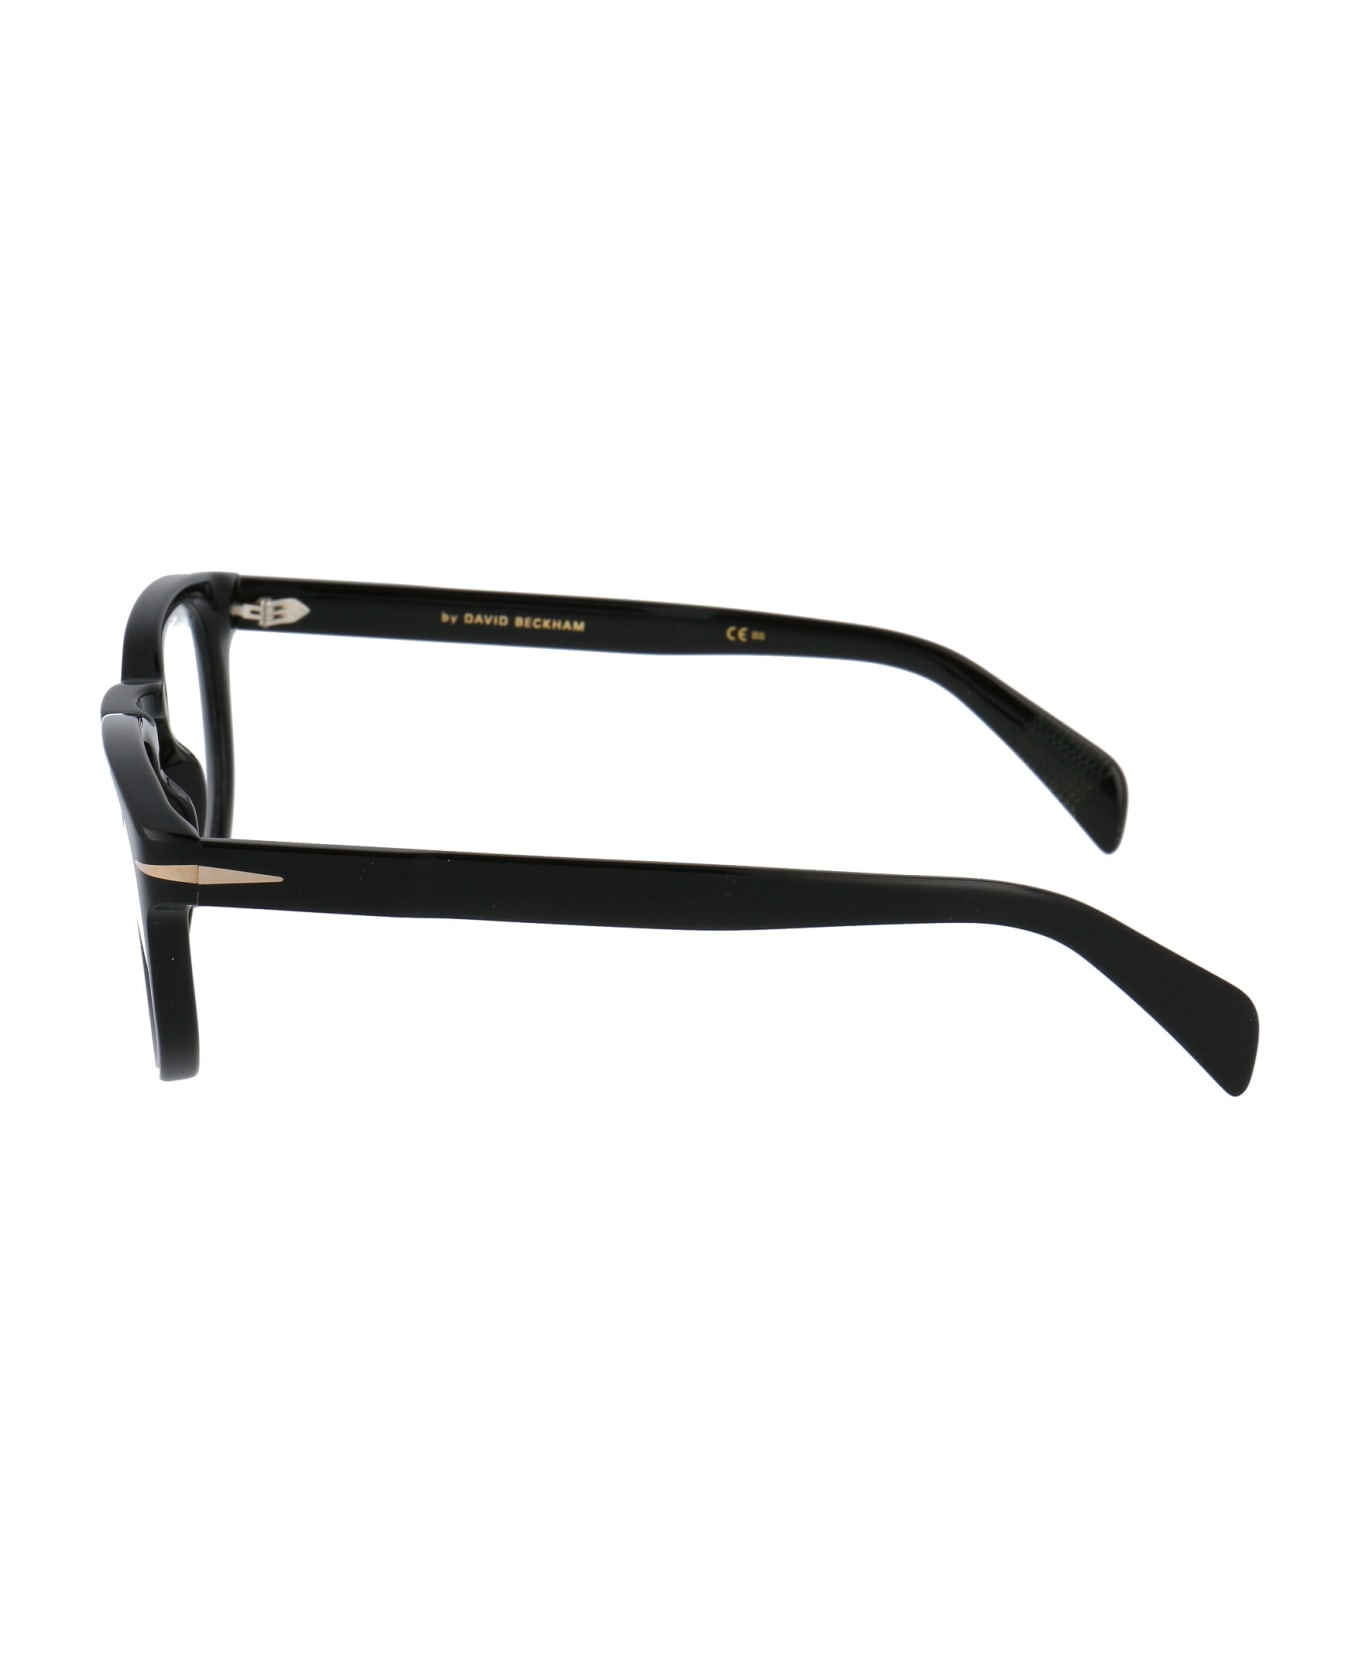 DB Eyewear by David Beckham Db 7050 Glasses - BSC BLACK SILVER アイウェア